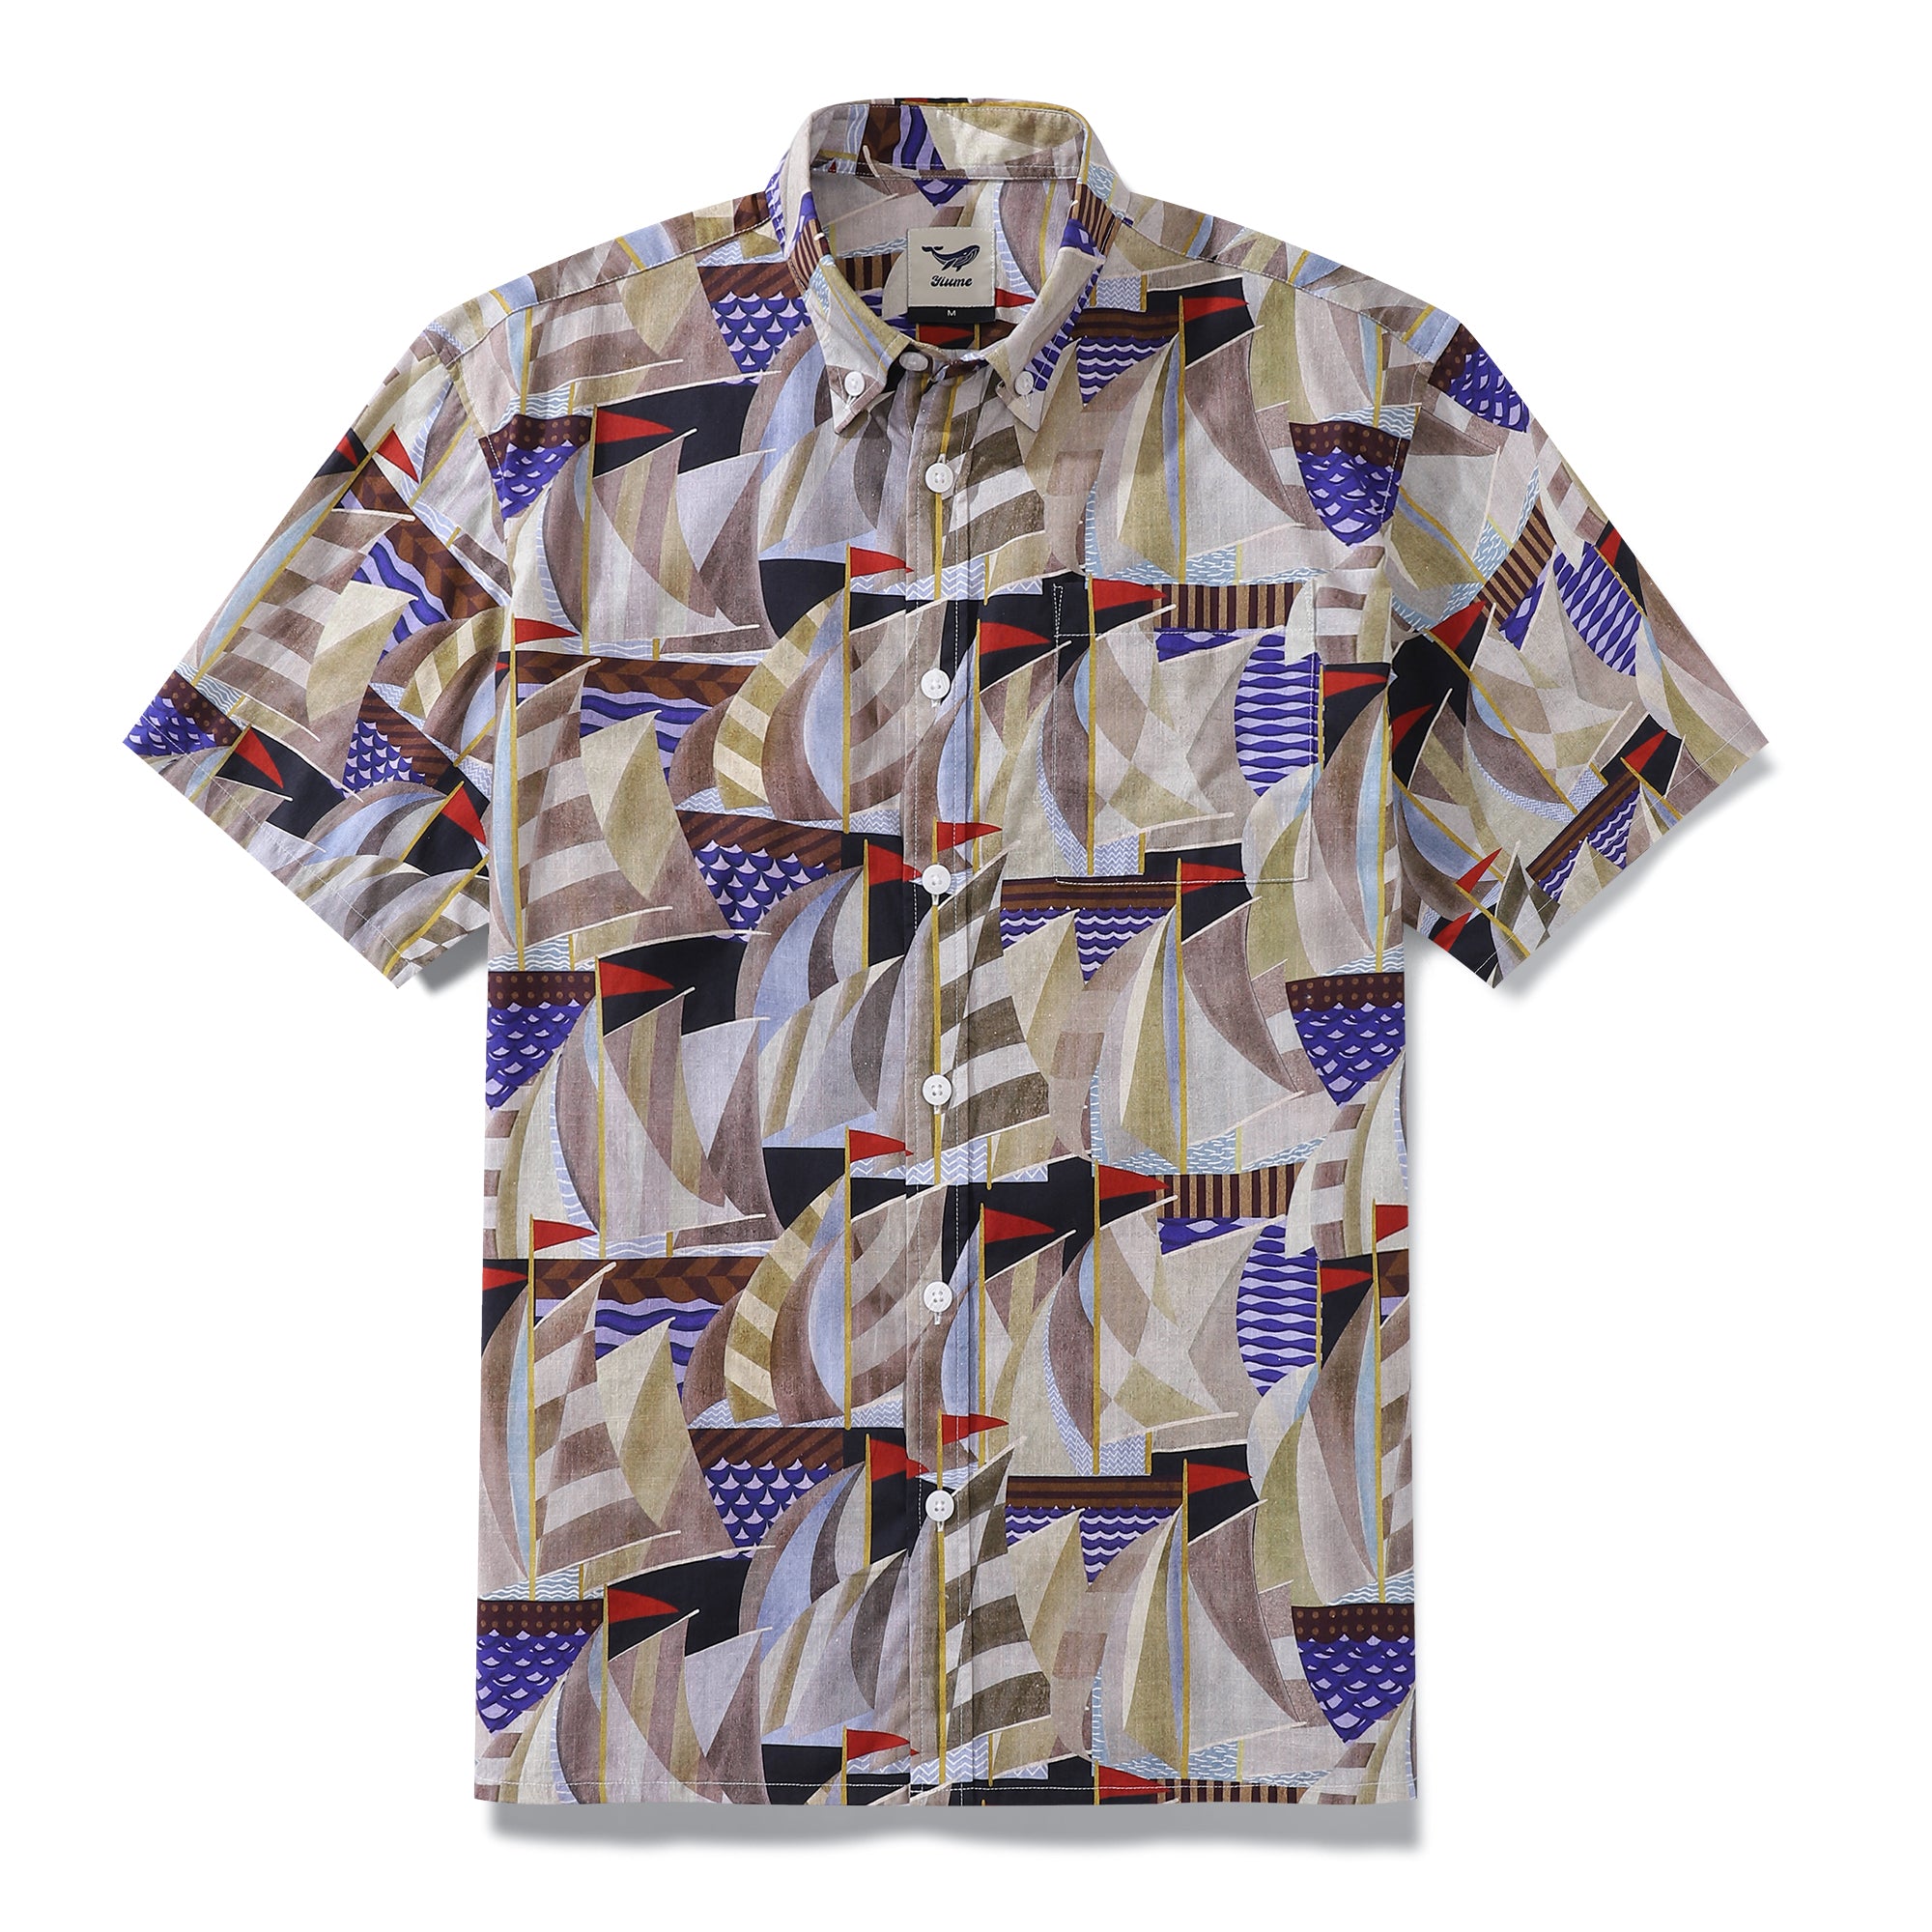 1960s Vintage Men's Hawaiian Shirt Sailboat Print Cotton Button-down Short Sleeve Aloha Shirt